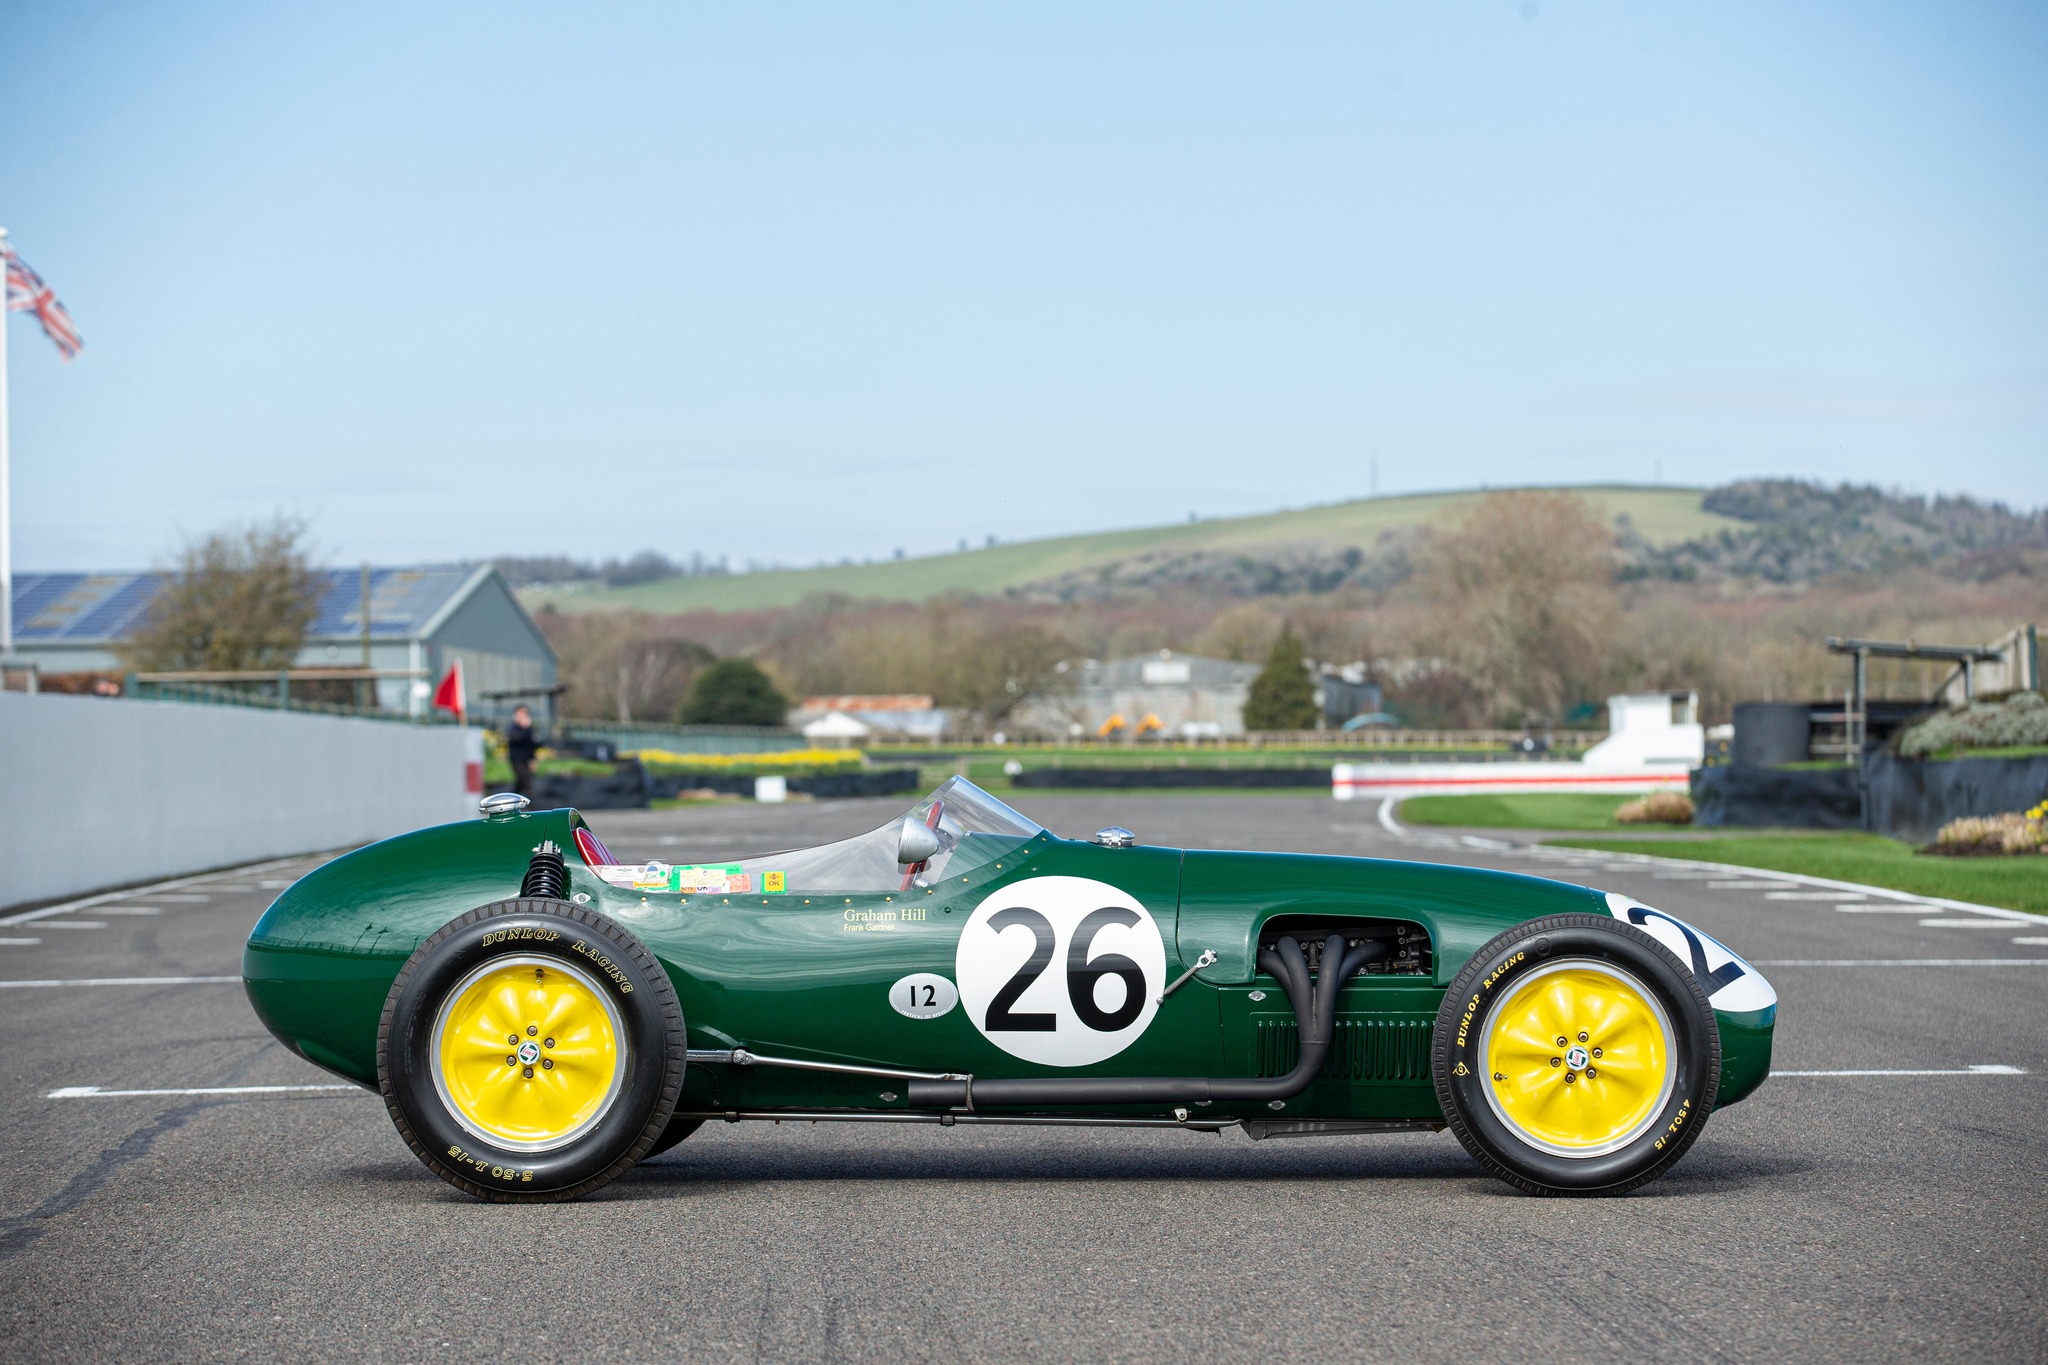 Lotus 12 no. 353 at Goodwood circuit